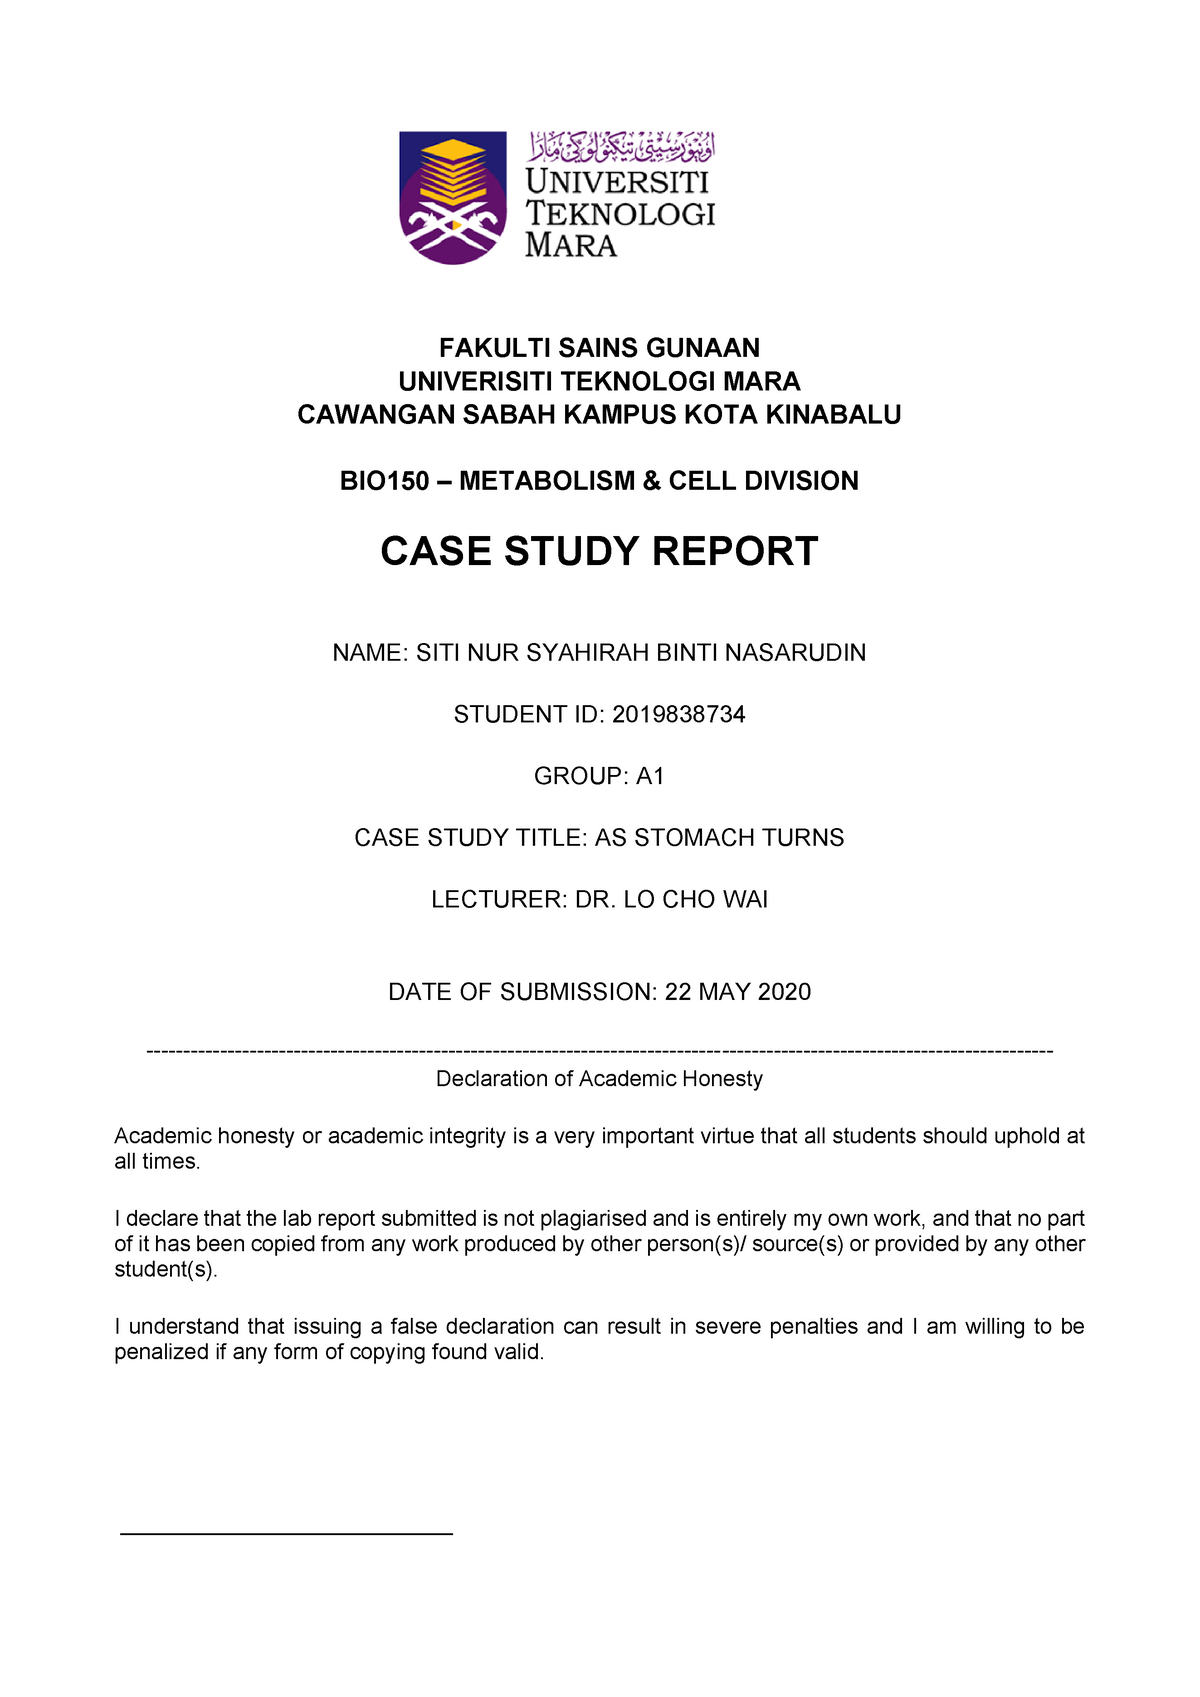 Case Study Biology Submit 2 Fakulti Sains Gunaan Univerisiti Teknologi Mara Studocu